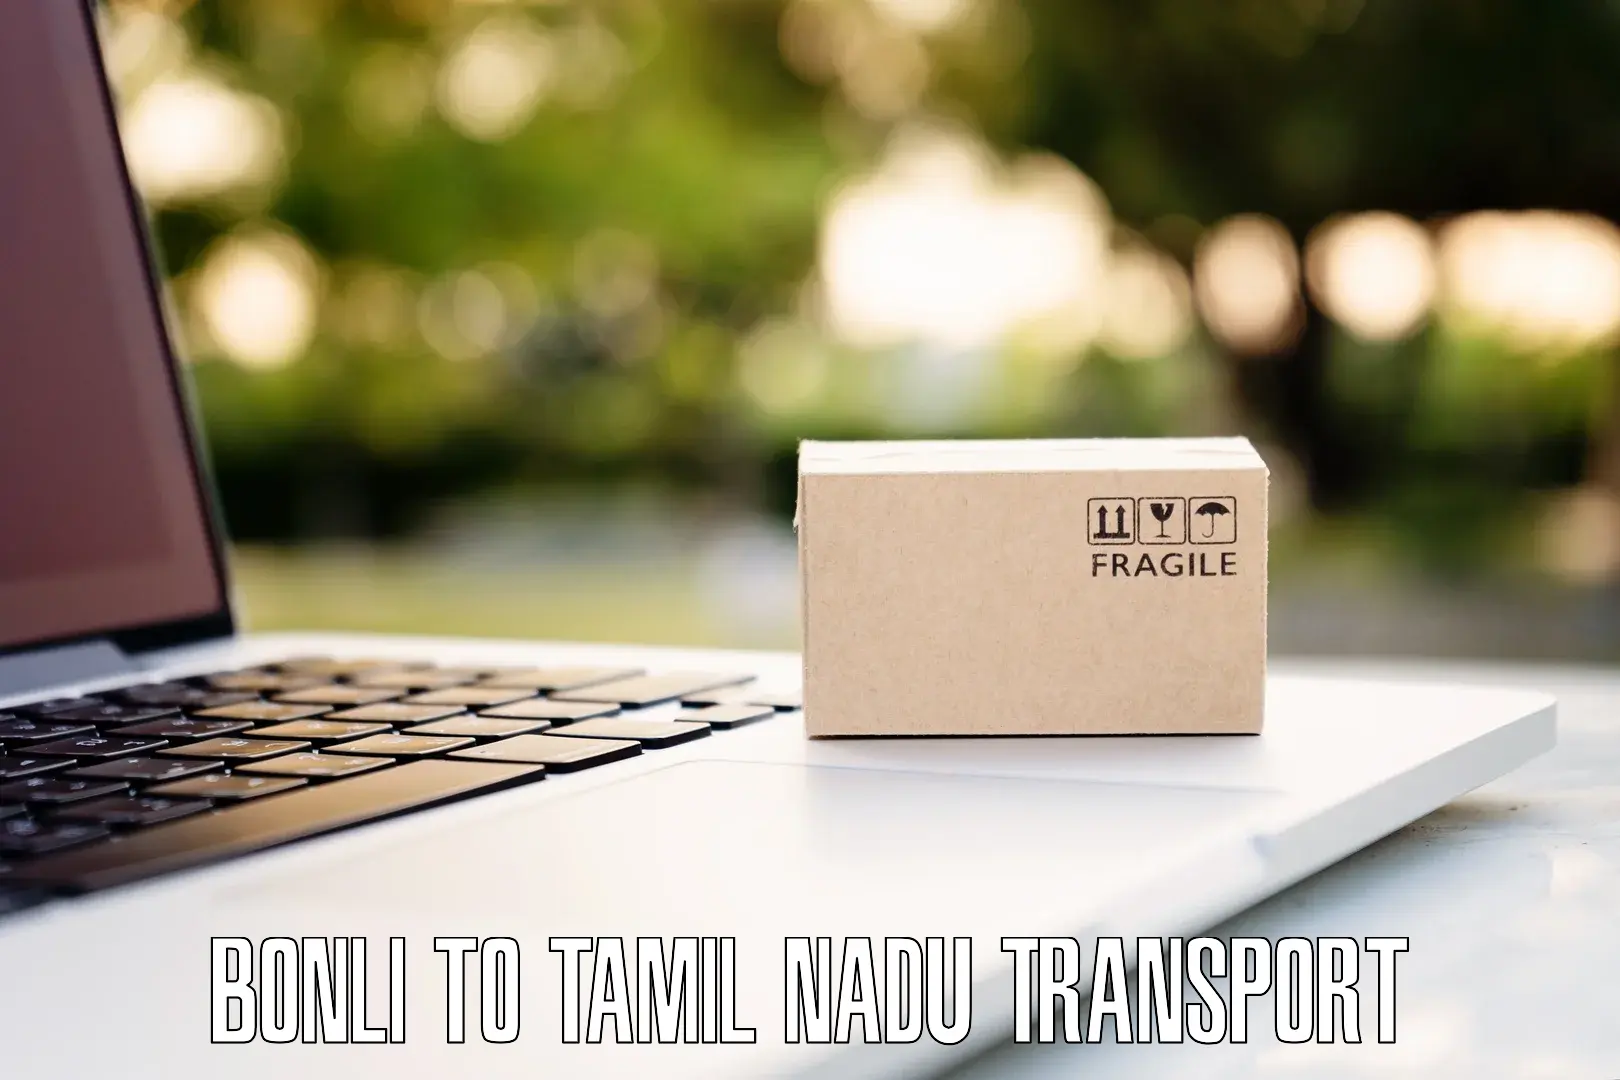 Nationwide transport services Bonli to Tamil Nadu